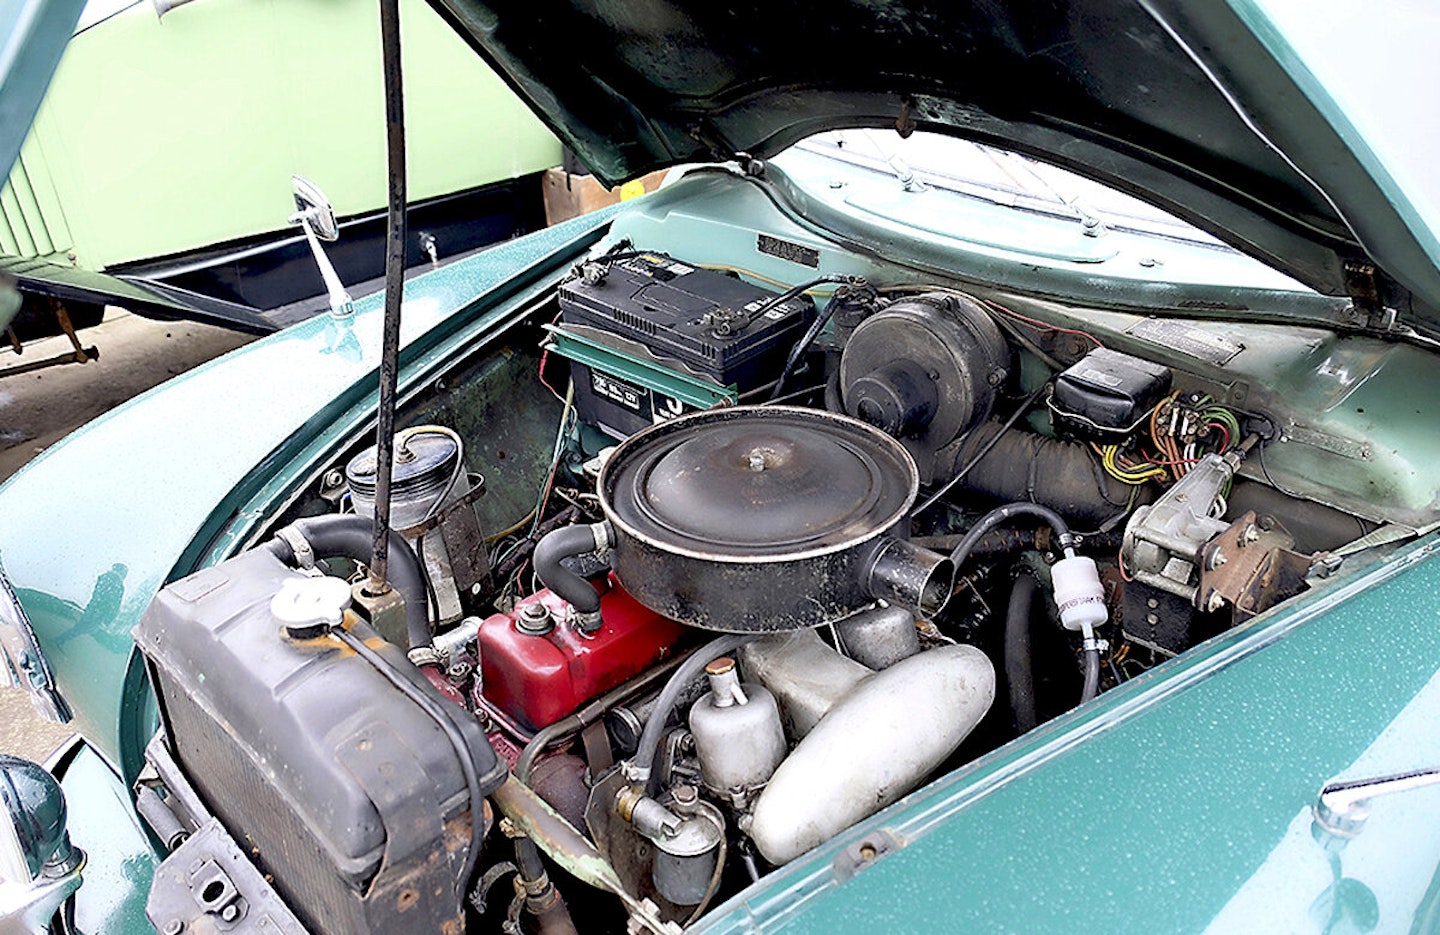 MG engine